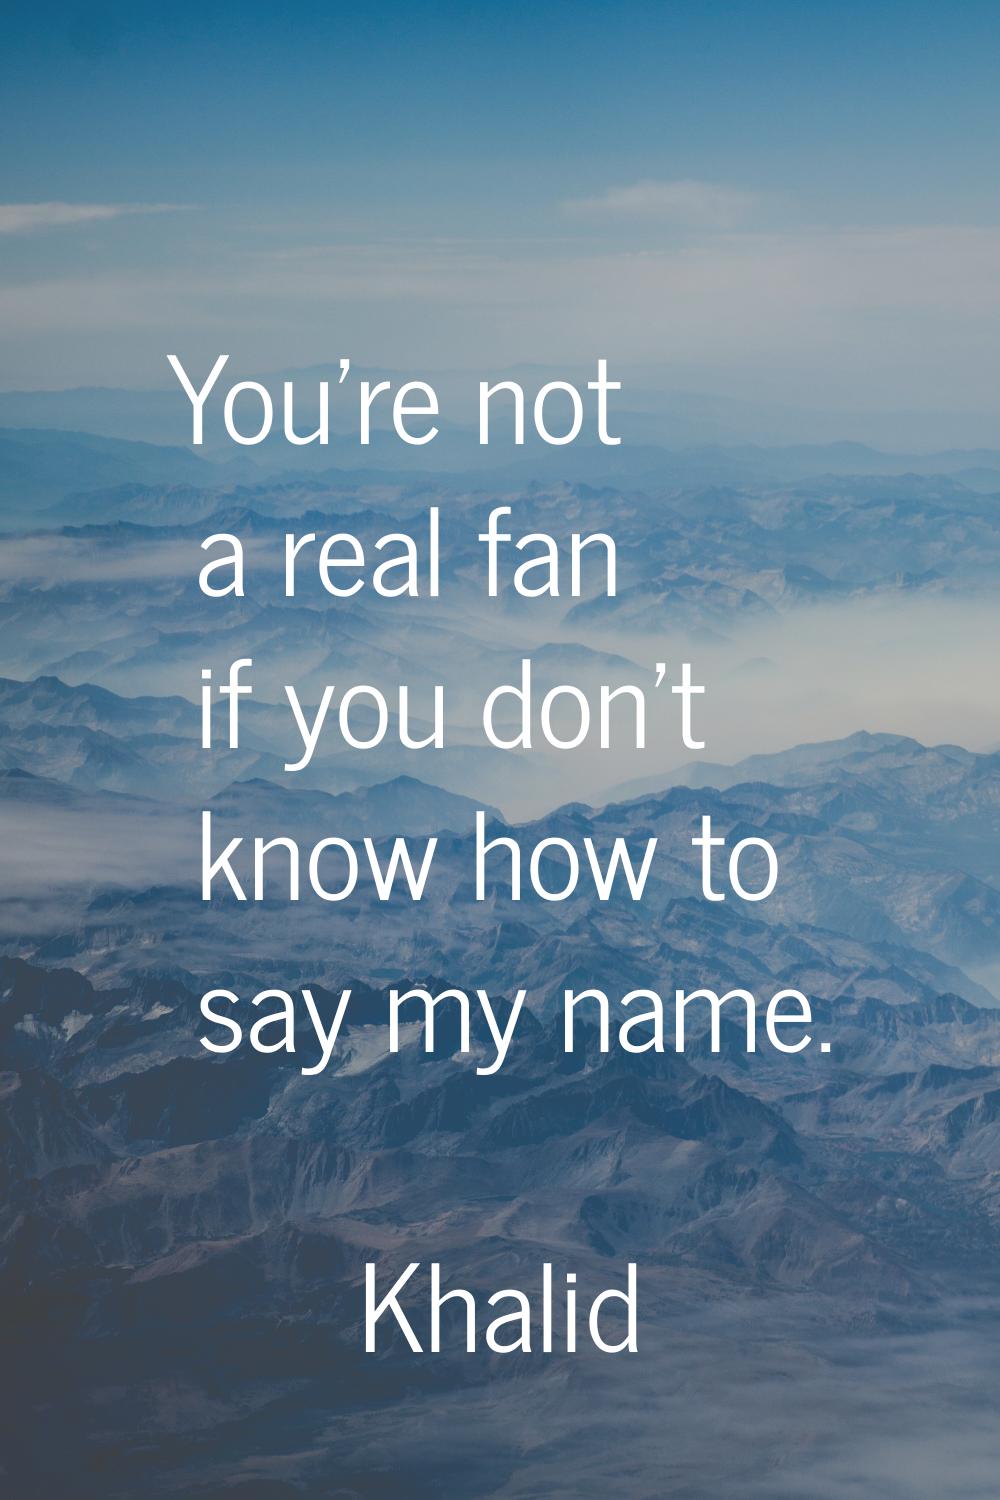 You're not a real fan if you don't know how to say my name.